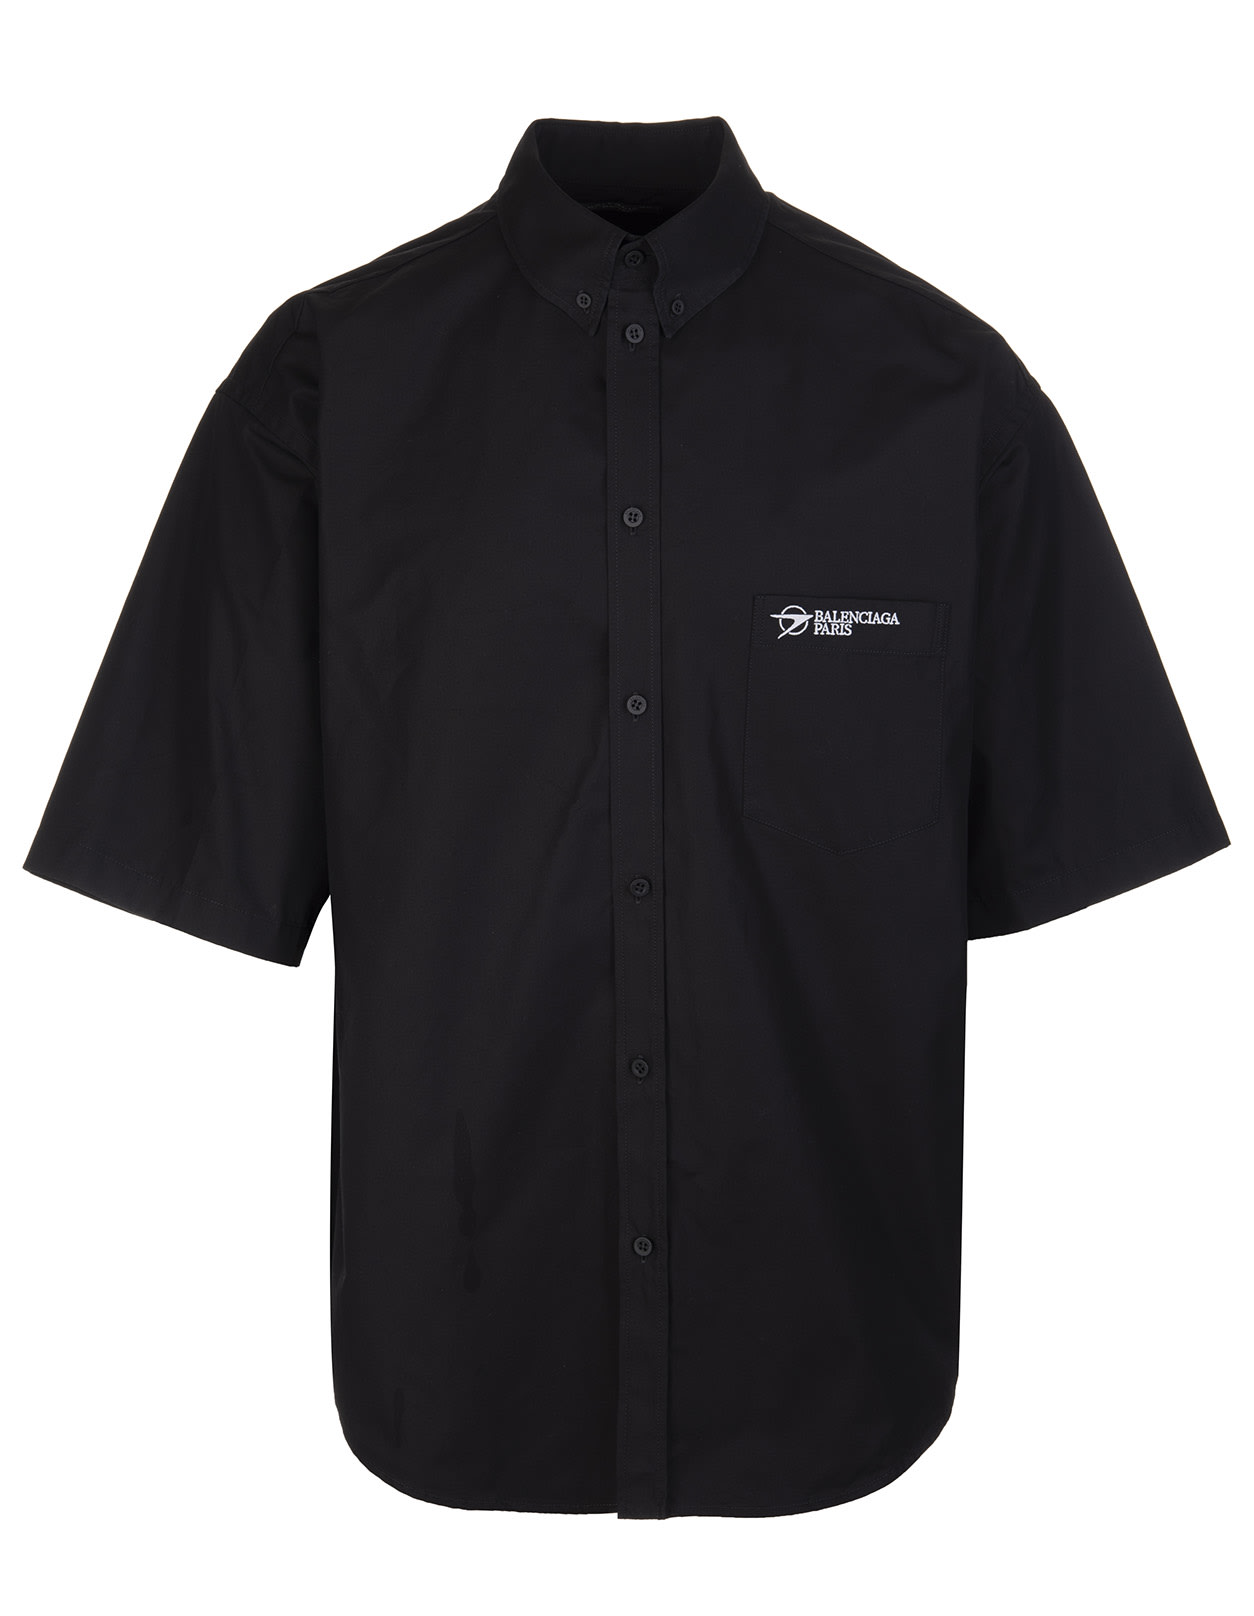 Man Black Balenciaga Corporate Short Sleeve Shirt